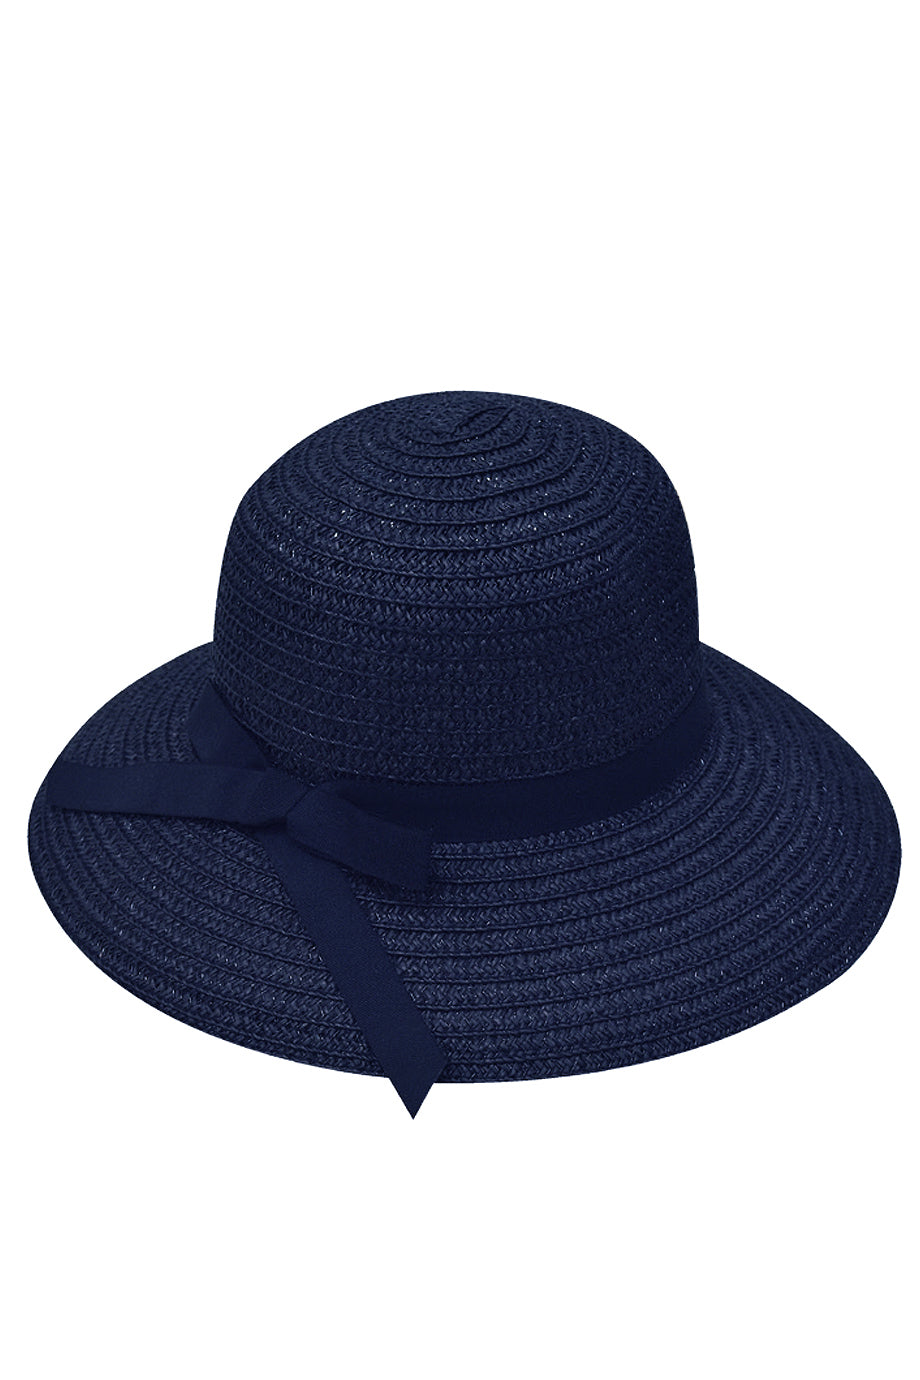 Flavia Blue Straw Hat